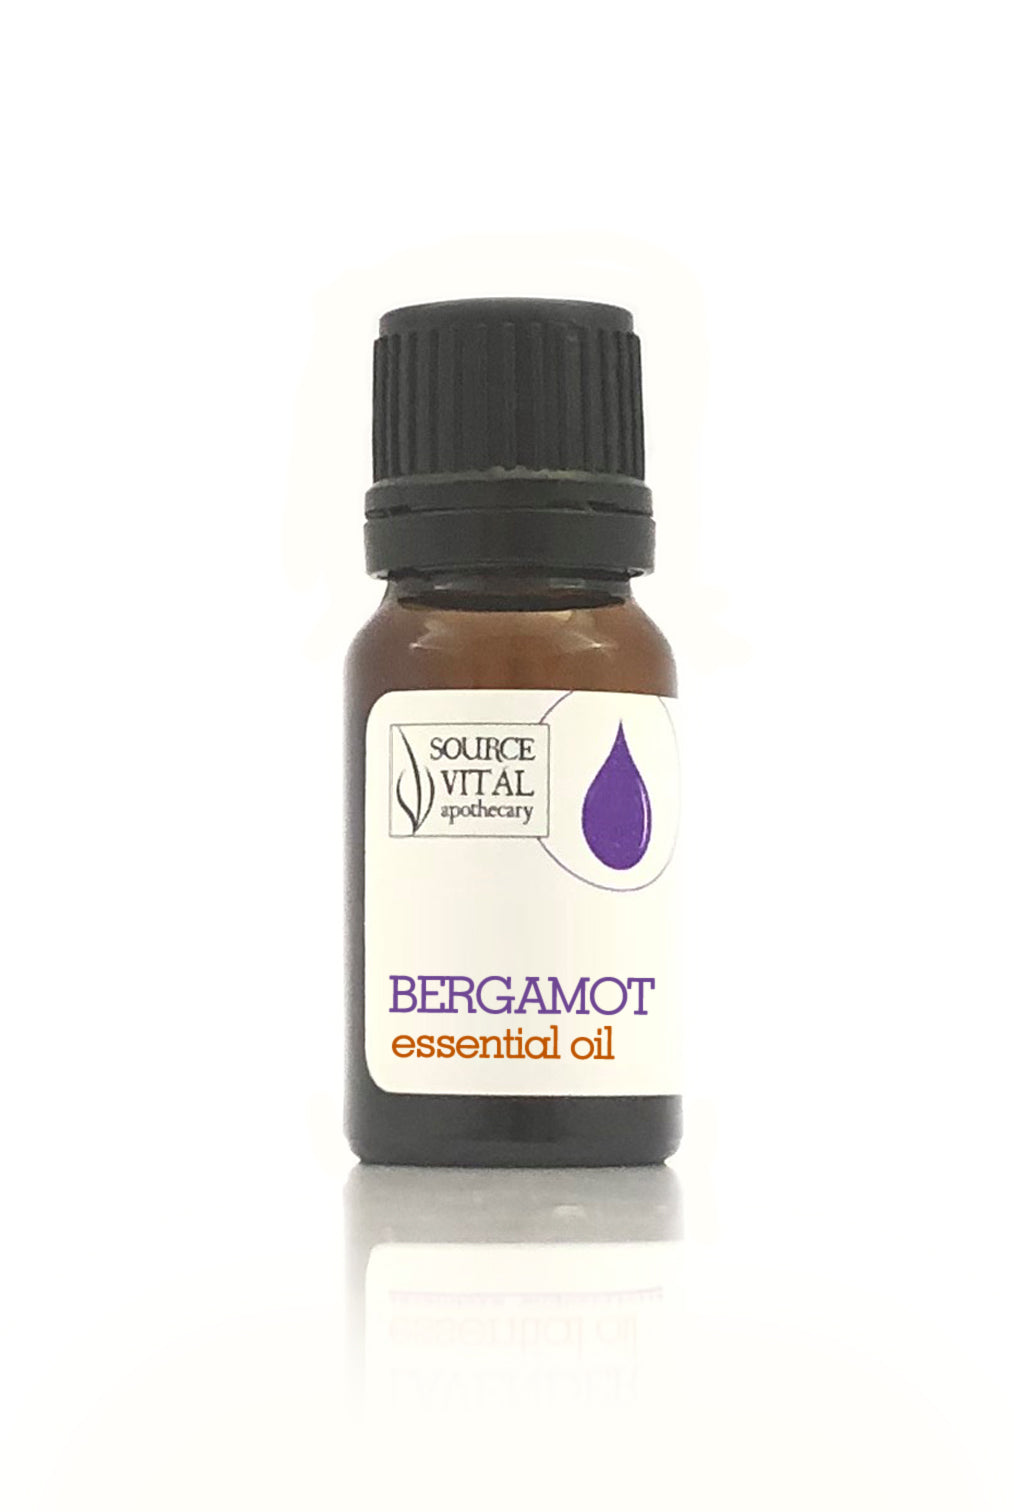 Now Essential Oils, 100% Pure, Bergamot - 1 fl oz